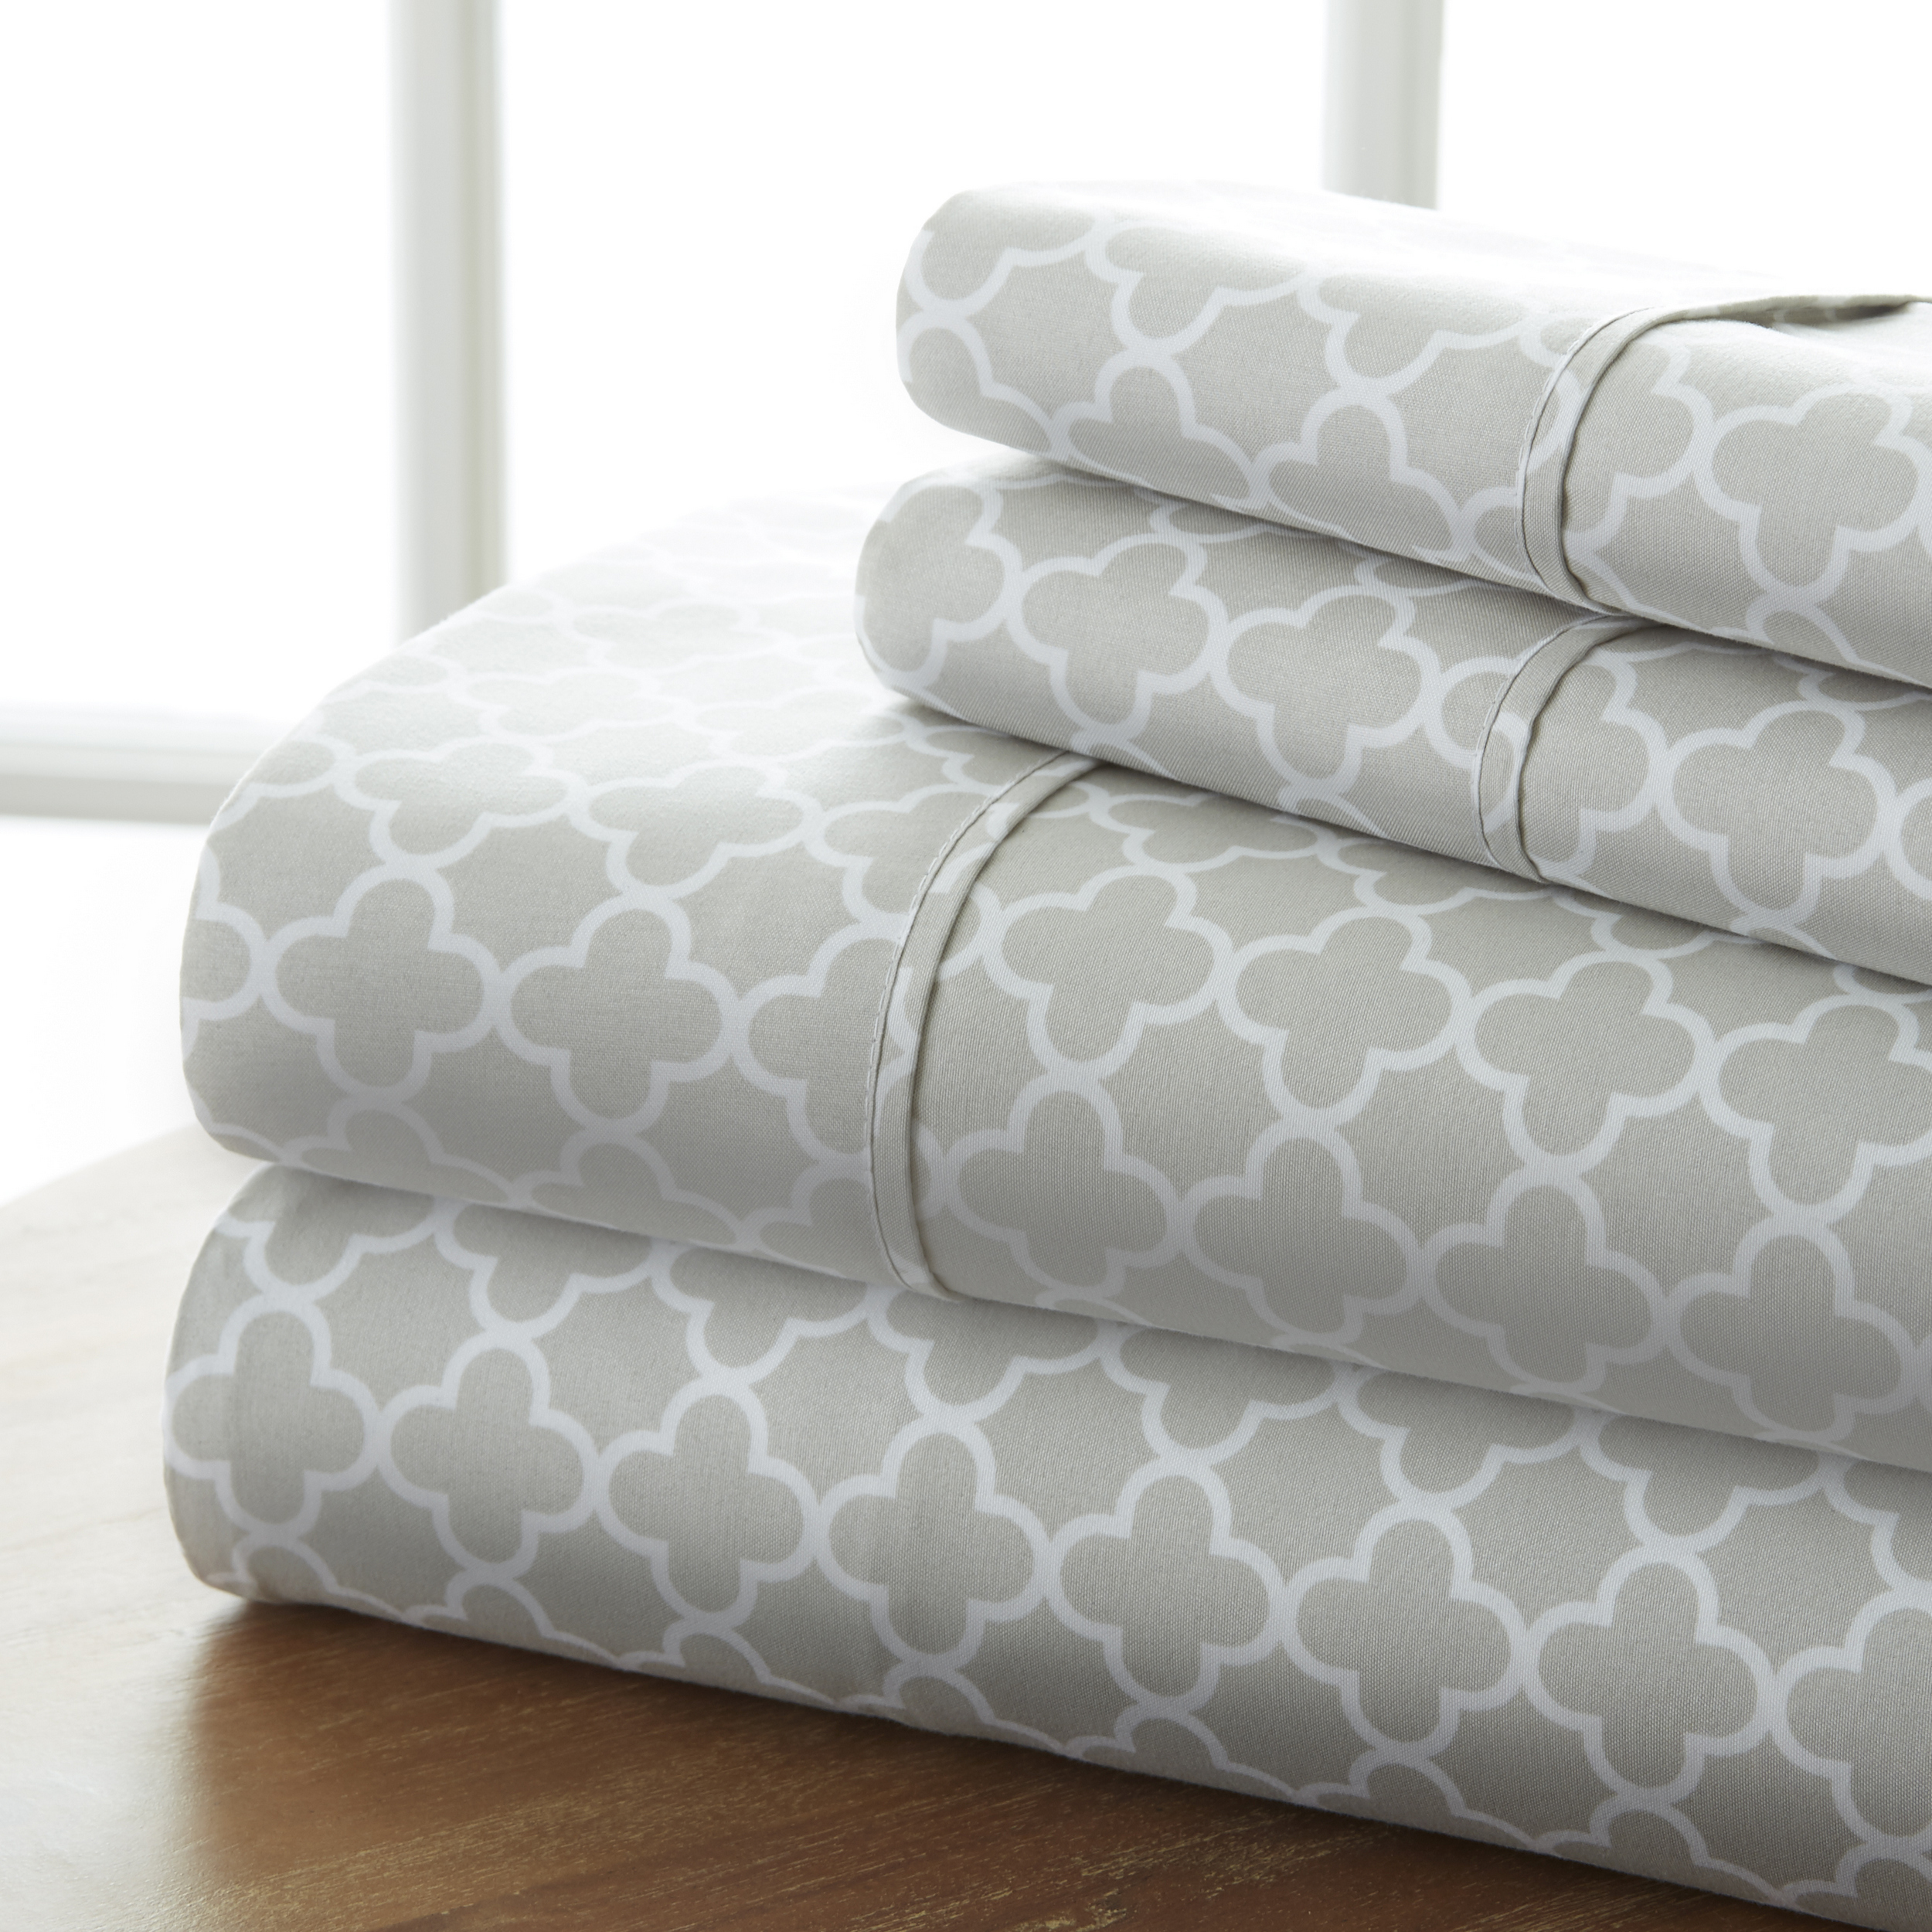 ienjoy Home Premium Ultra Soft Quatrefoil Pattern 4 Piece Bed Sheet Set